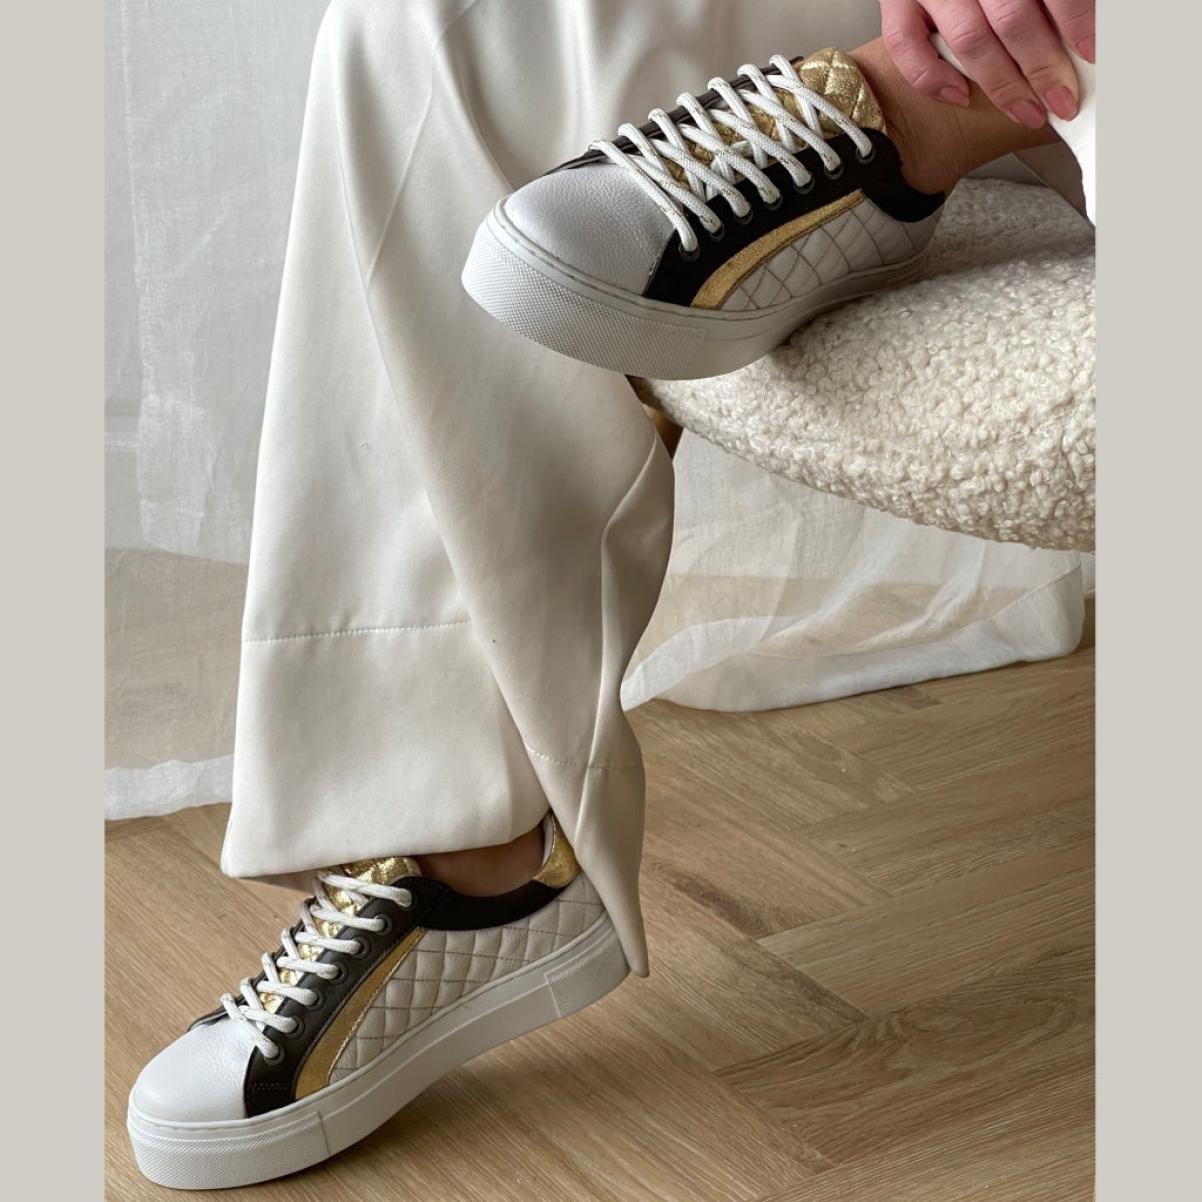 Exquisite Sneakers Women Sailor Days - White/Olive/Gold Copenhagen Shoes - 3